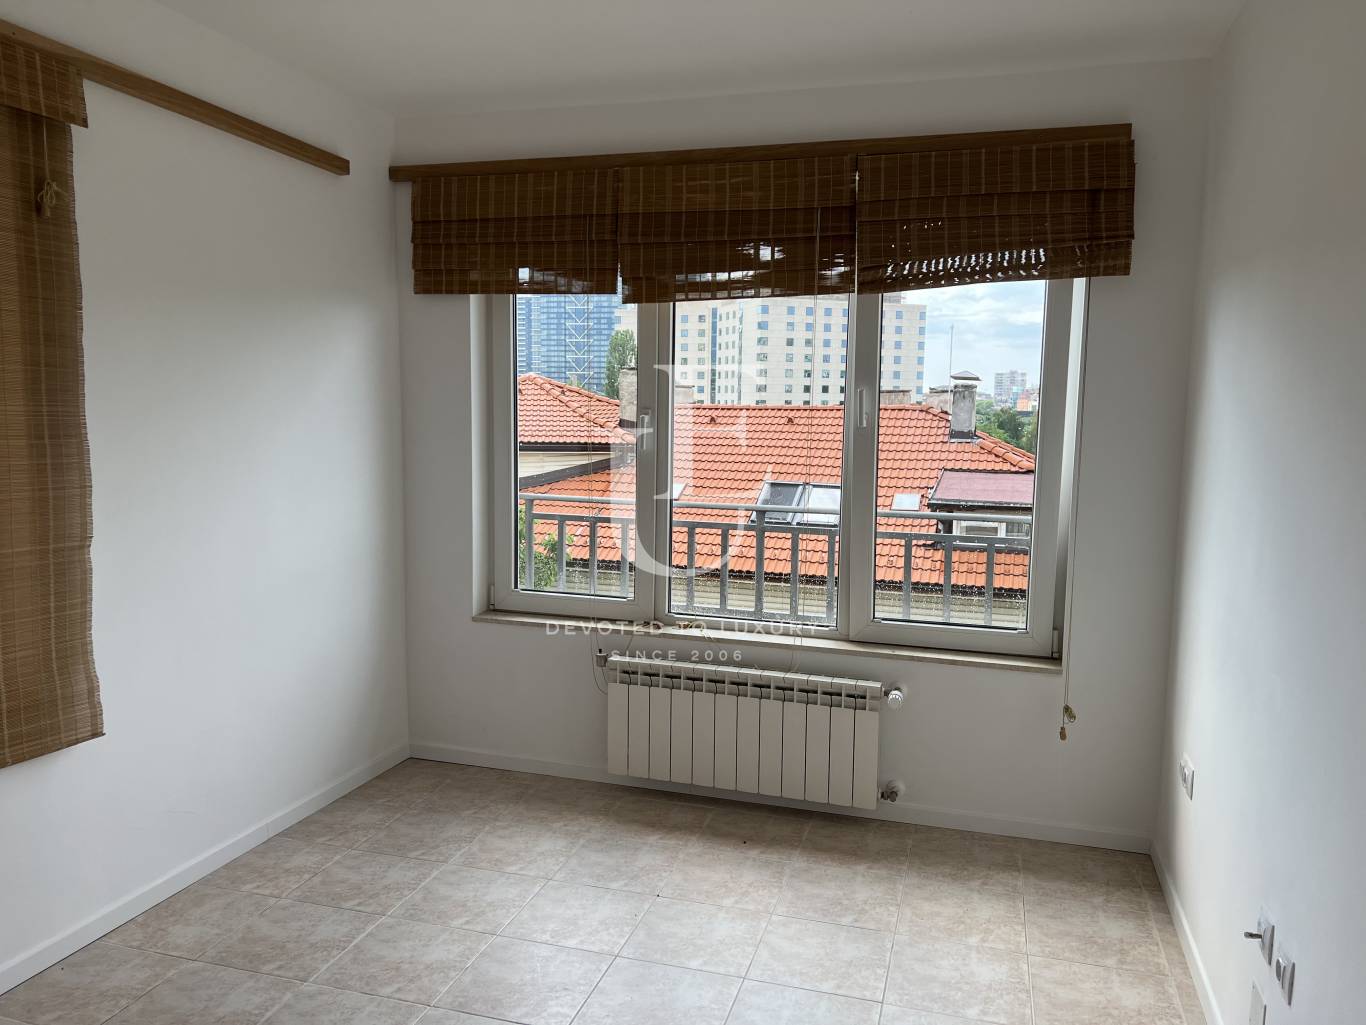 Апартамент под наем в София, Лозенец - код на имота: E17706 - image 5